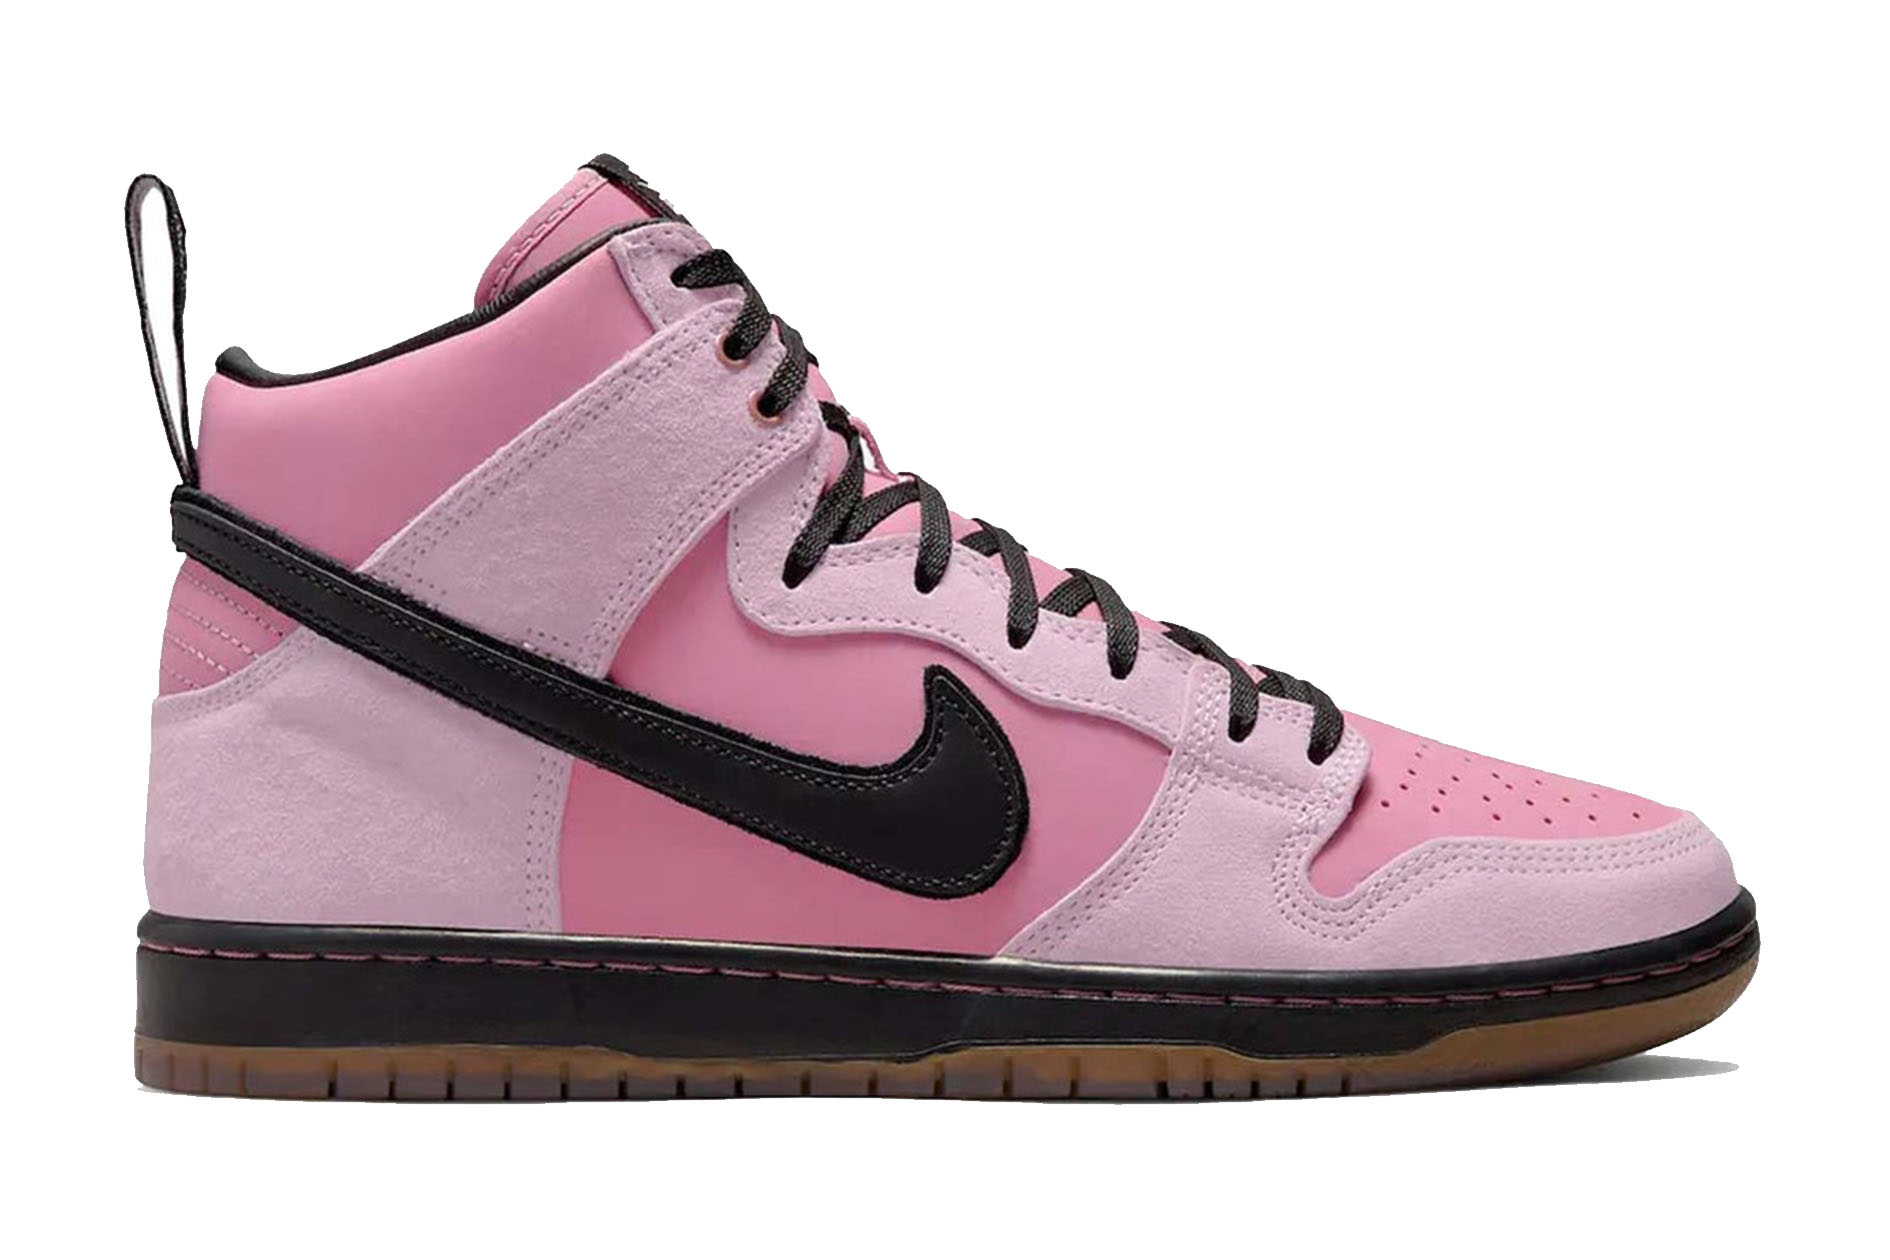 Champagne Ewell Intensive De Nike à Jordan Brand : Ces sneakers roses qu'on aime quand même